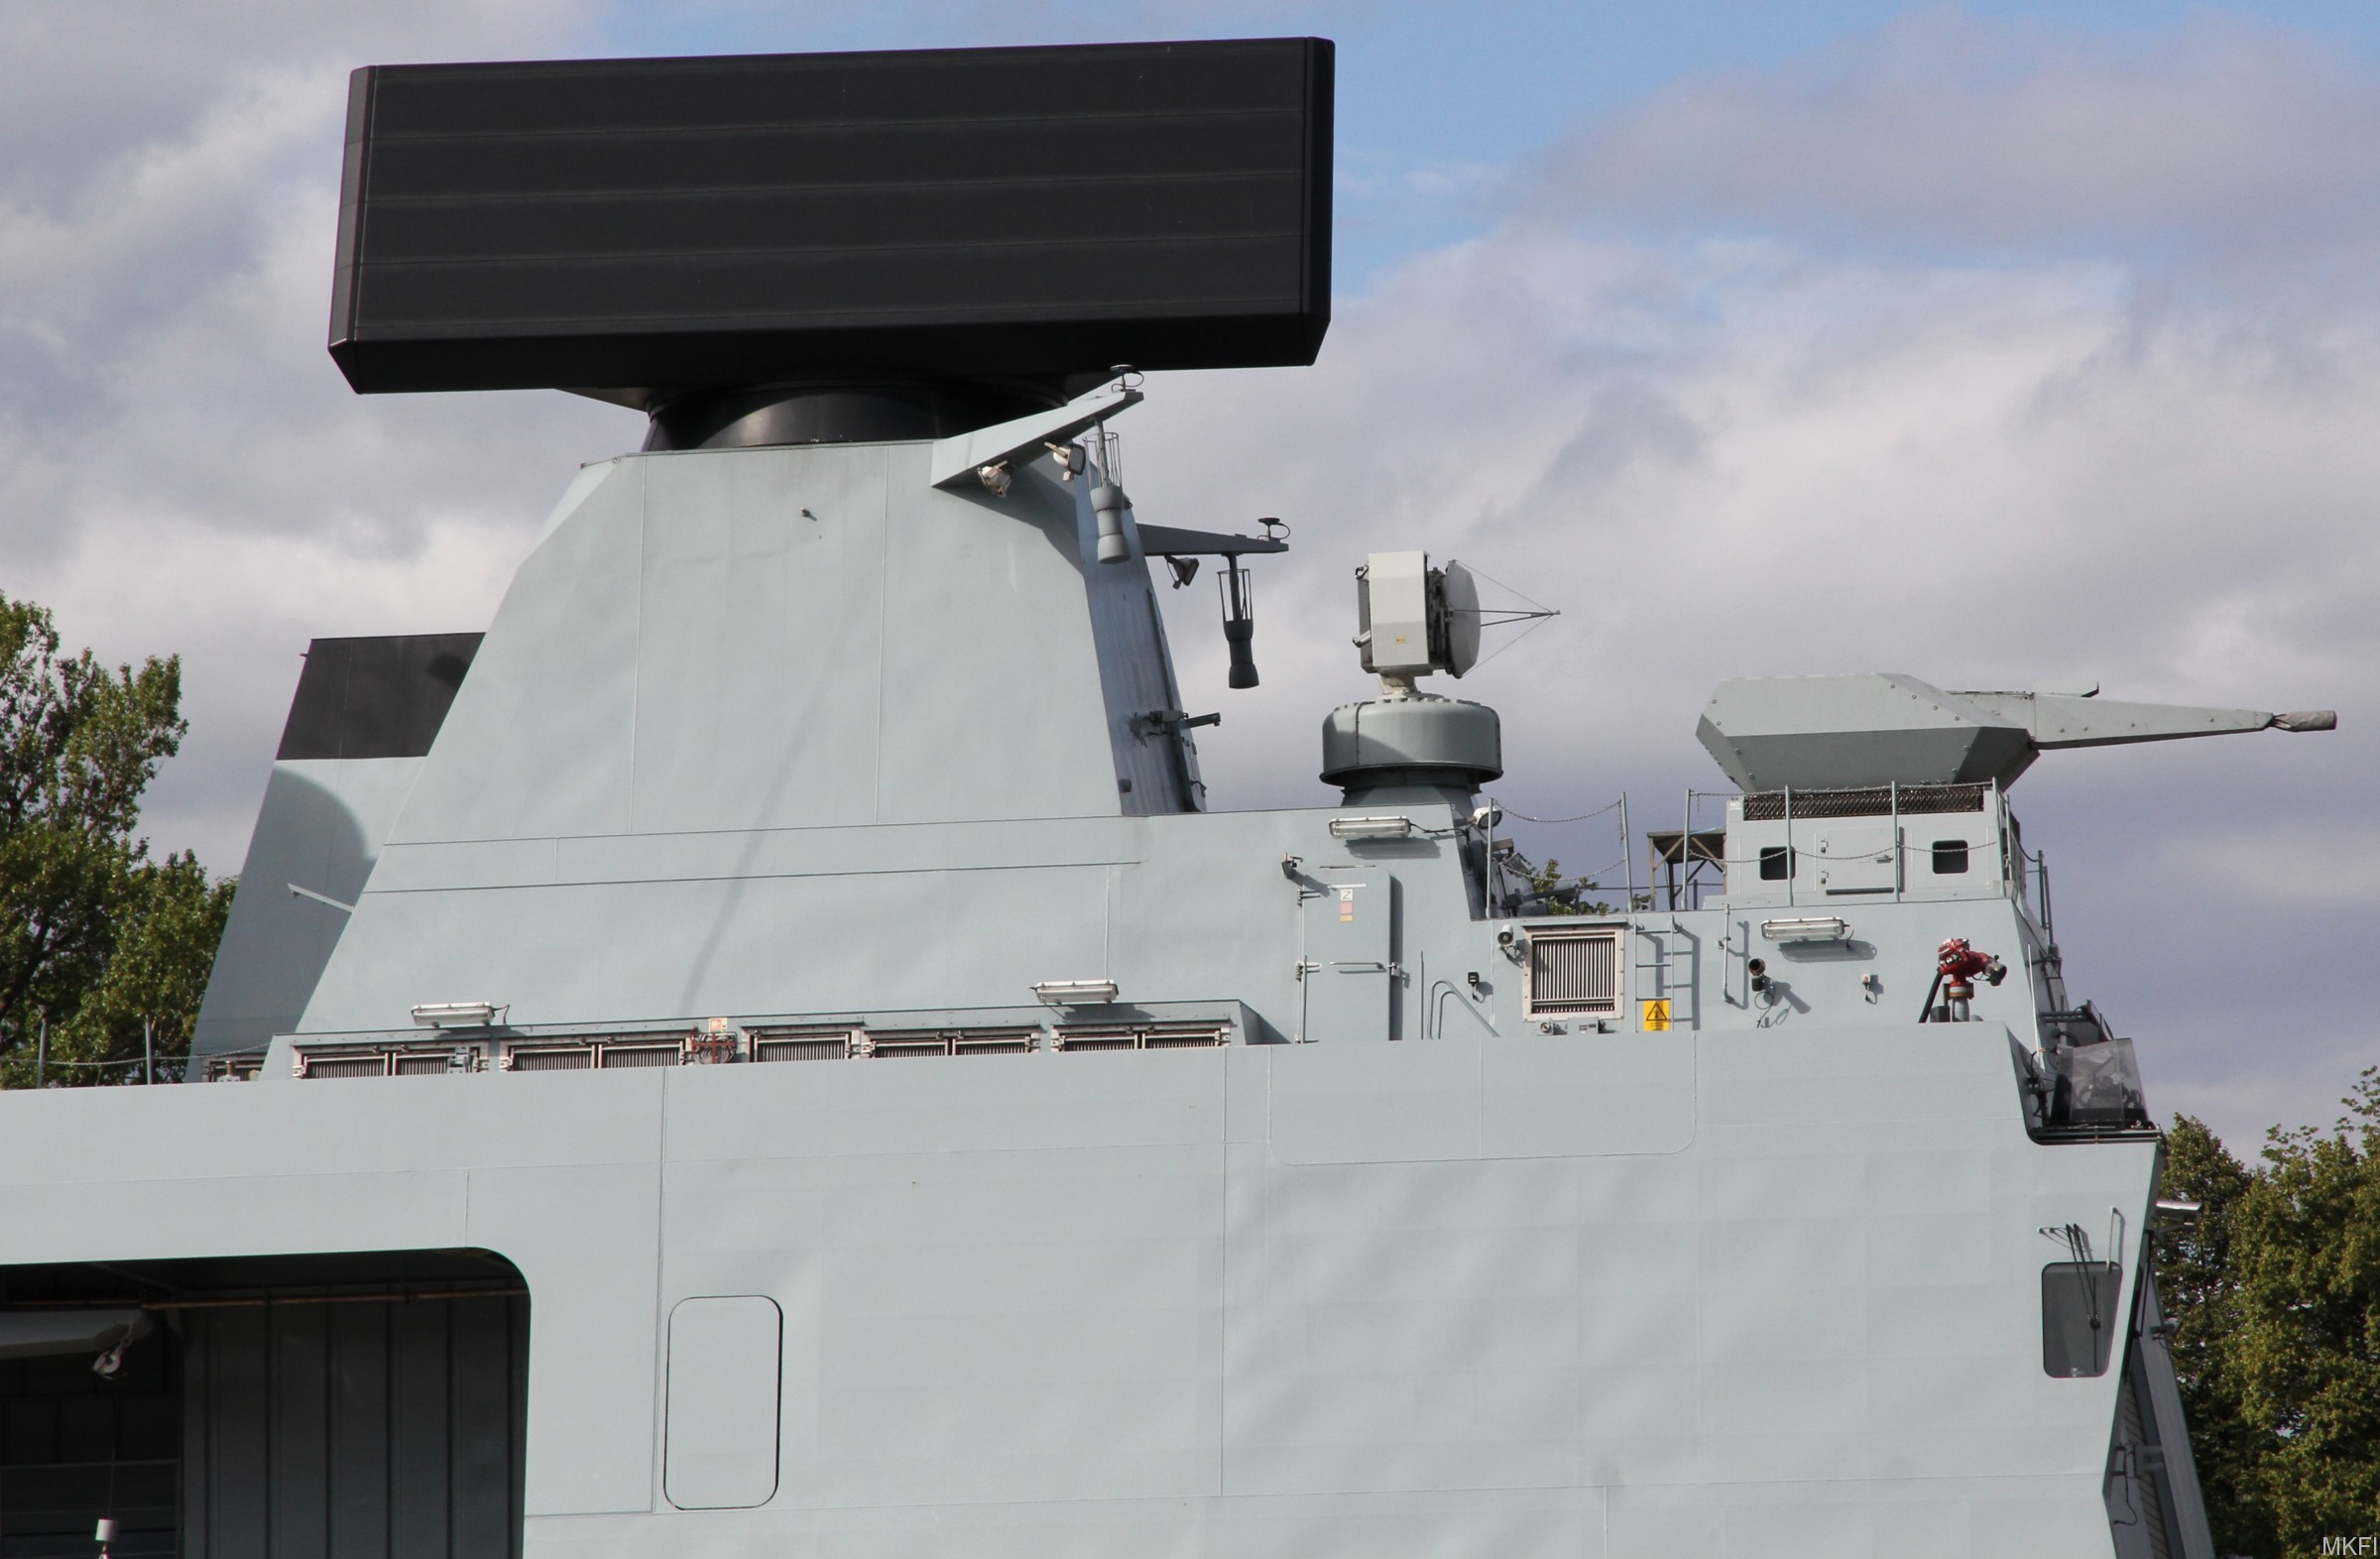 iver huitfeldt class guided missile frigate royal danish navy 05x thales smart-l radar